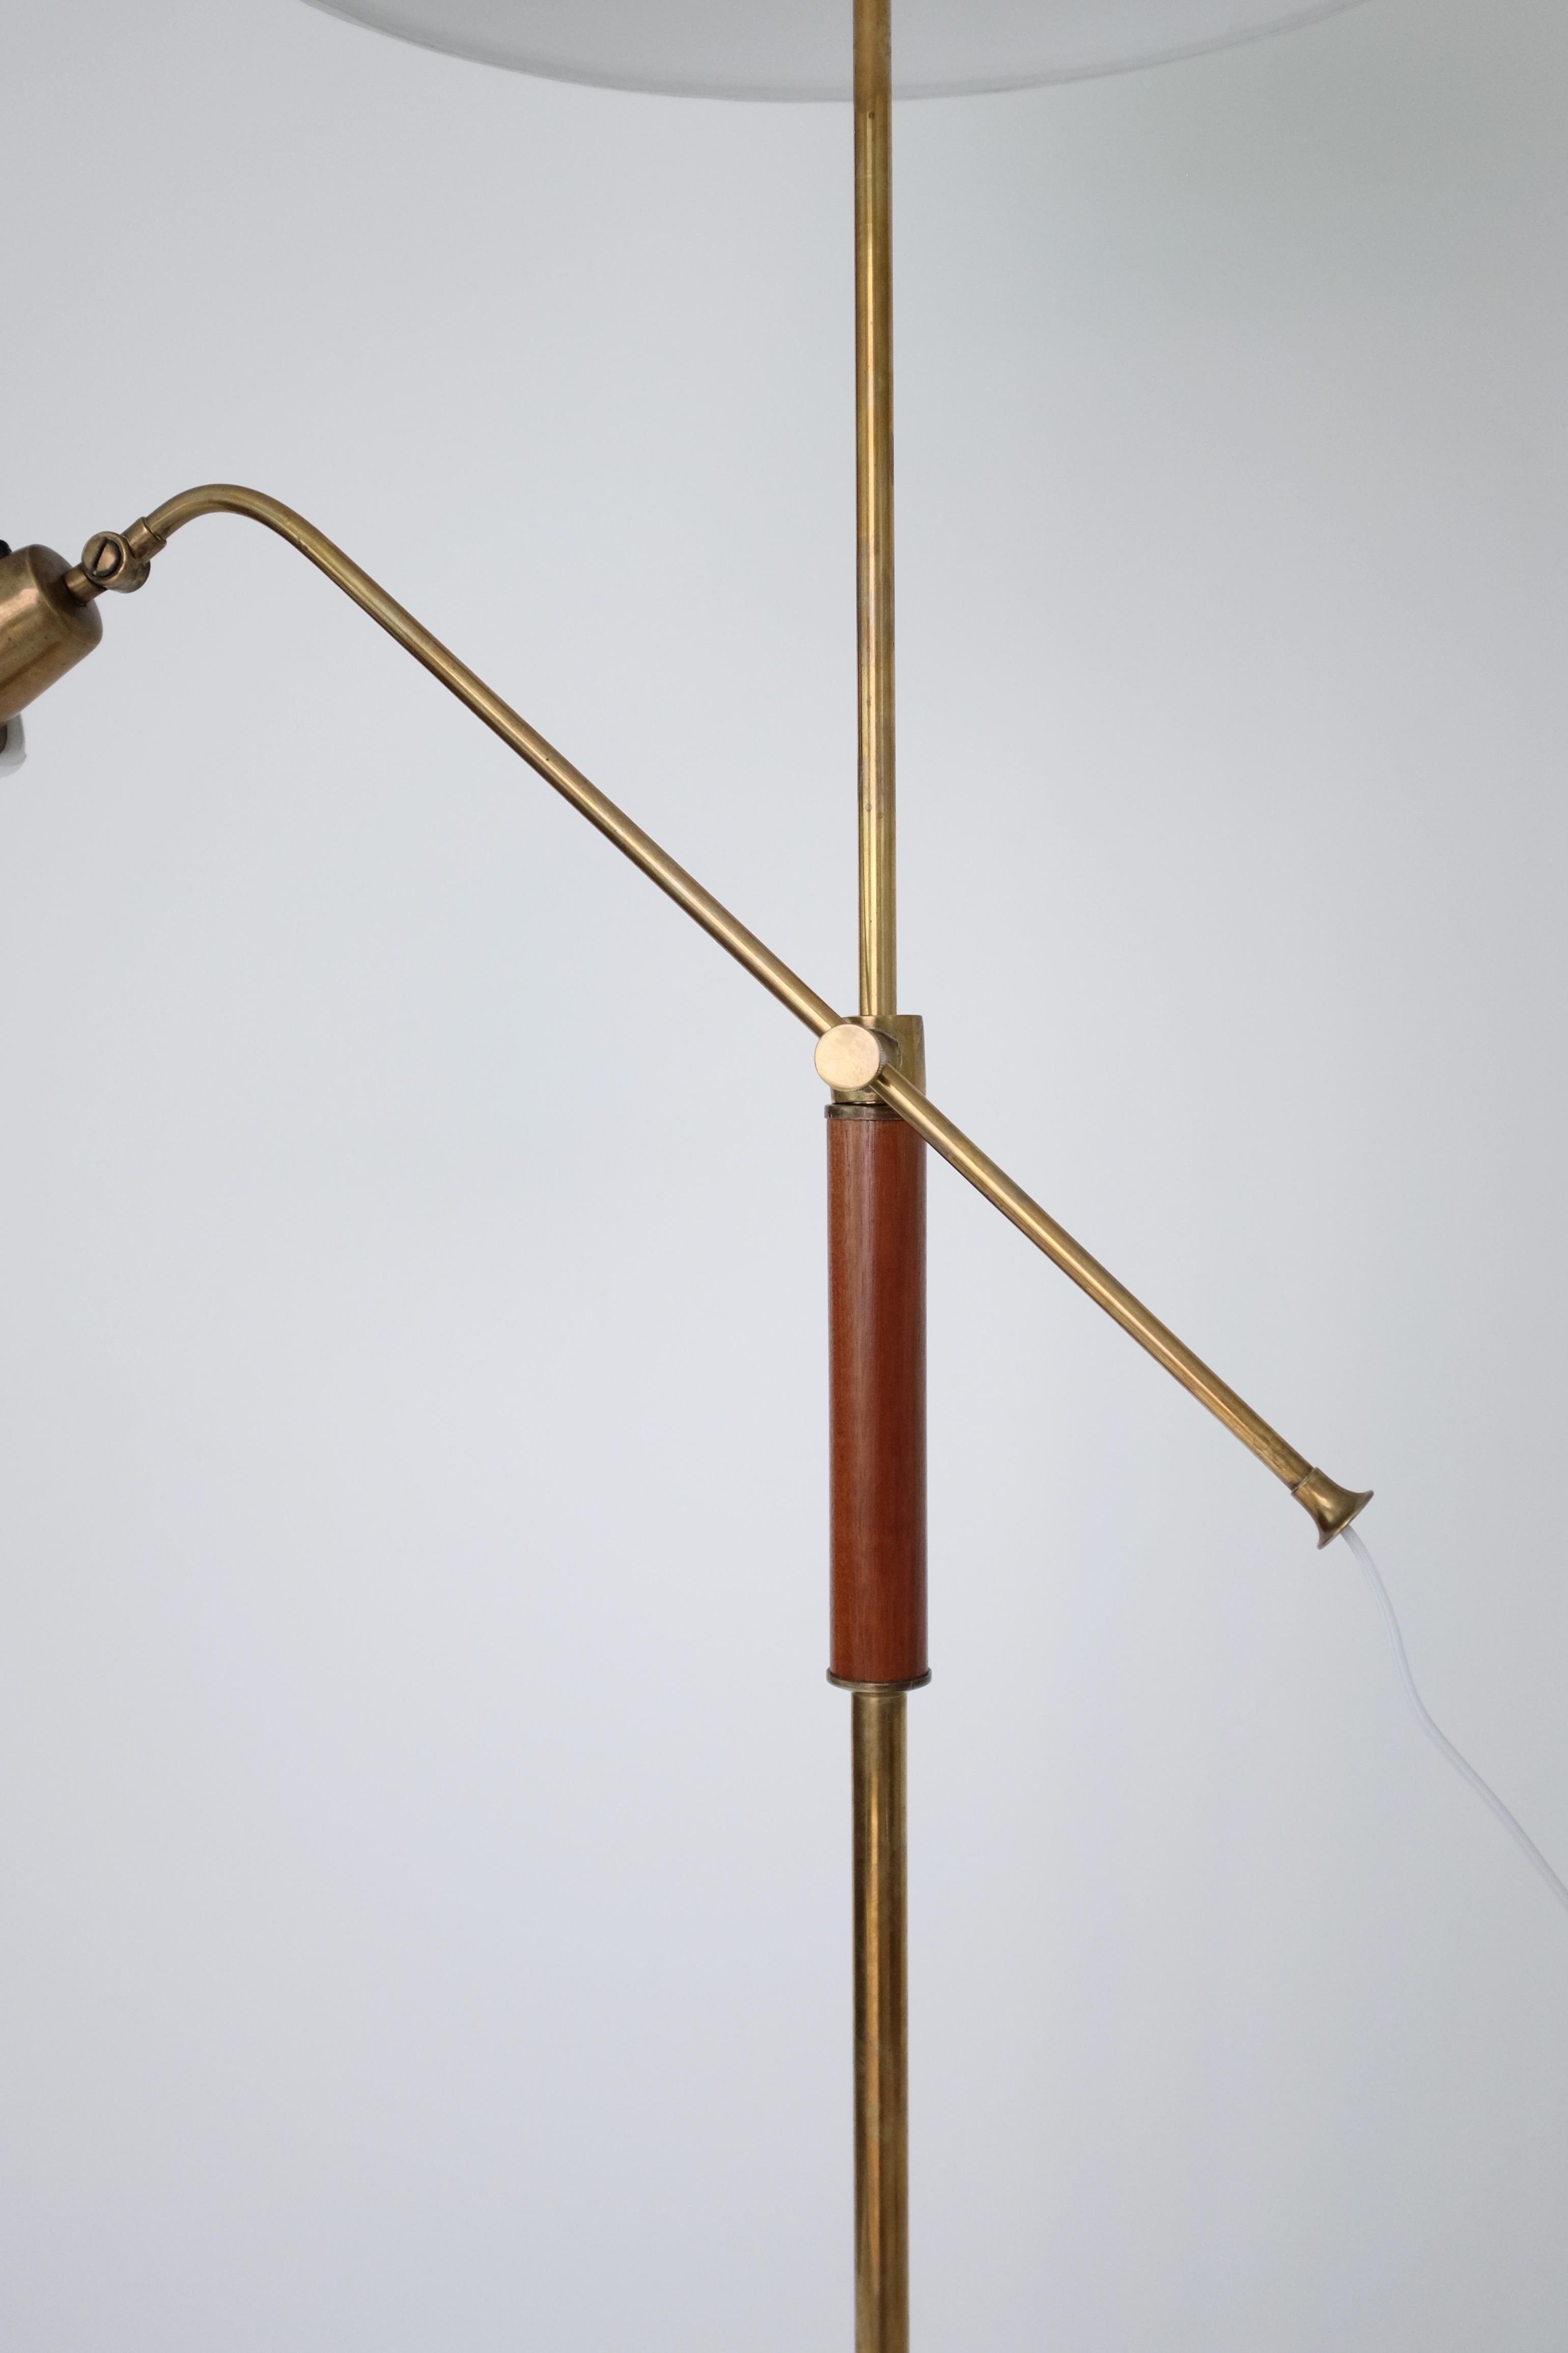 Scandinavian Modern 1950's, Brass and Wood Floor Lamp by Bertil Brisborg for Nordiska Kompaniet For Sale